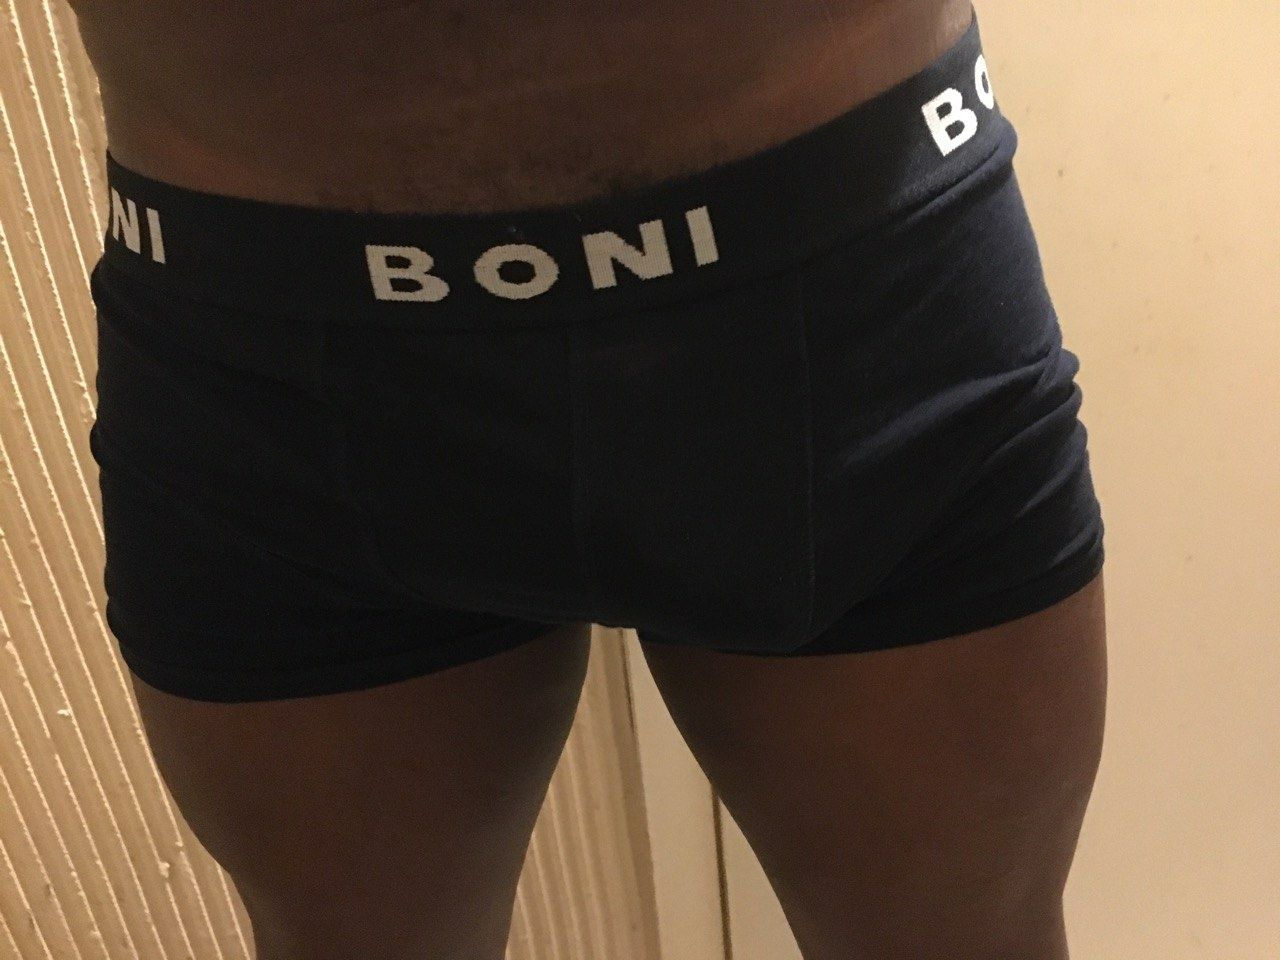 Hot bbc pants underwear